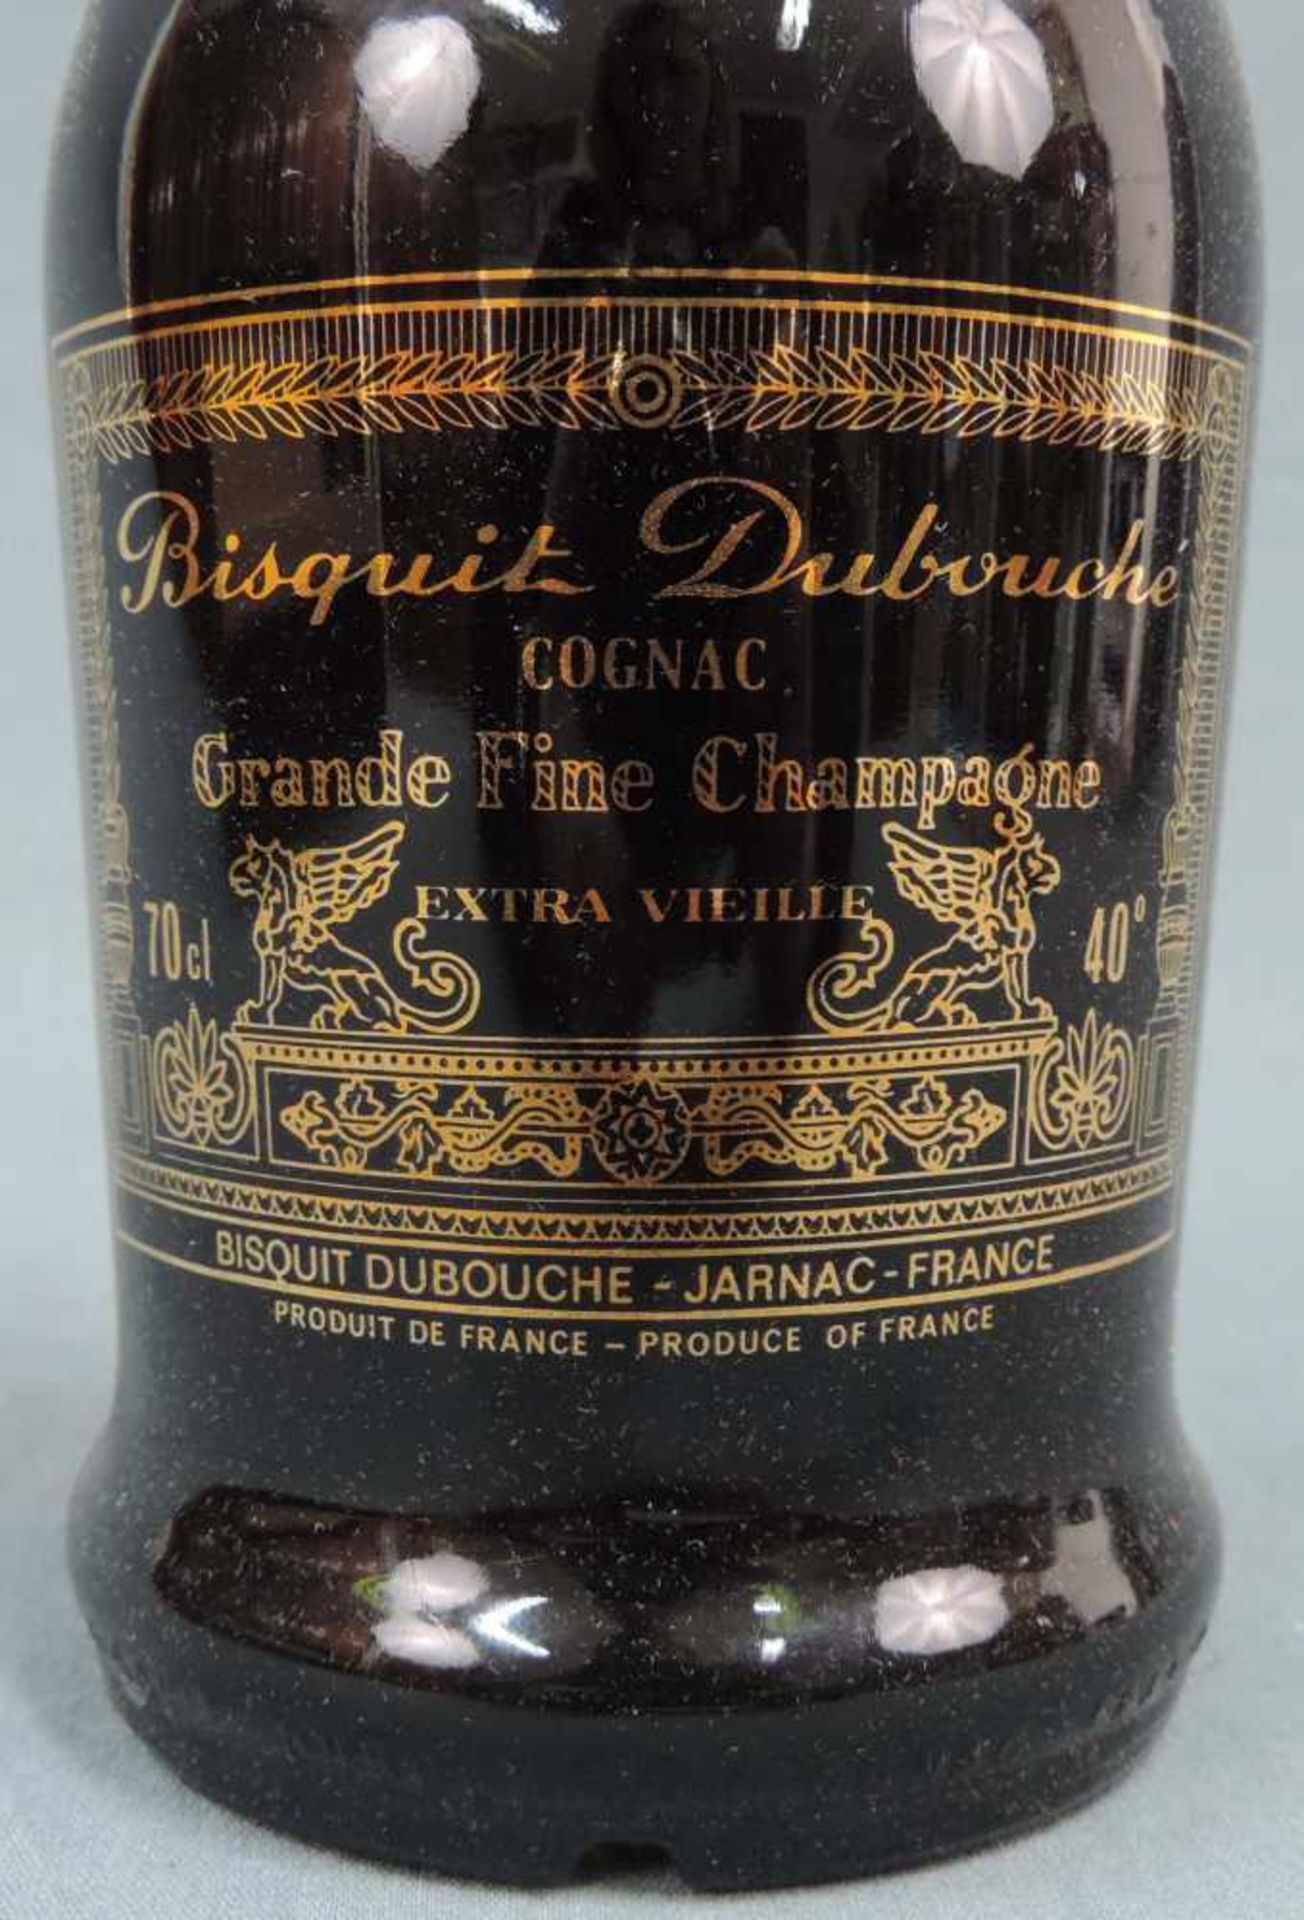 Grande Fine Champagne, Bisquit Dubouche Cognac Grande Fine Champagne, Extra Vieille. 40%, 70cl. - Image 7 of 10